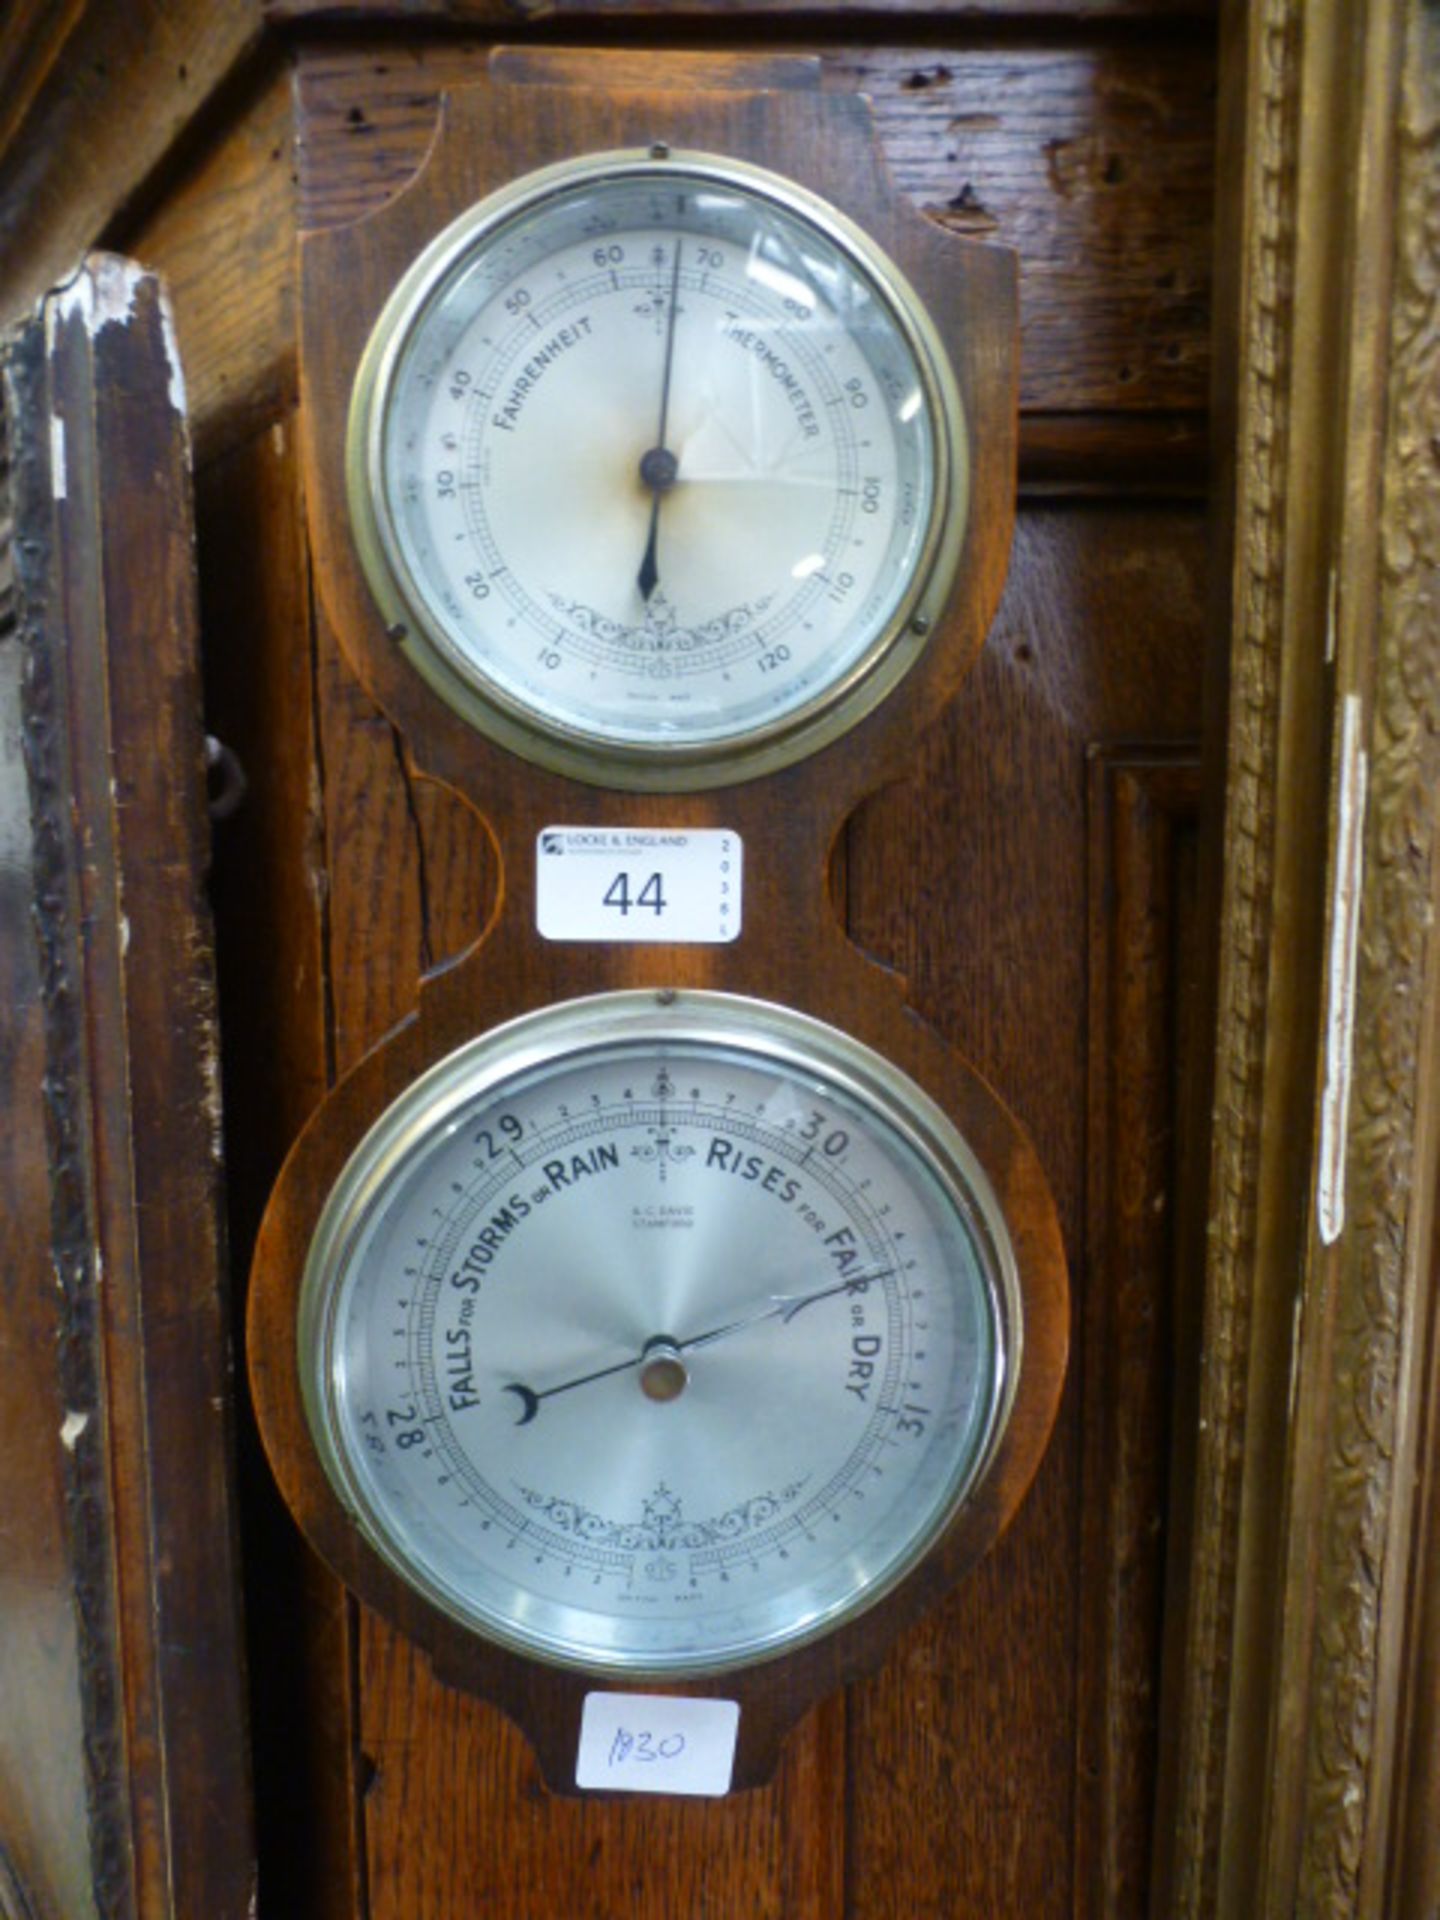 A modern barometer